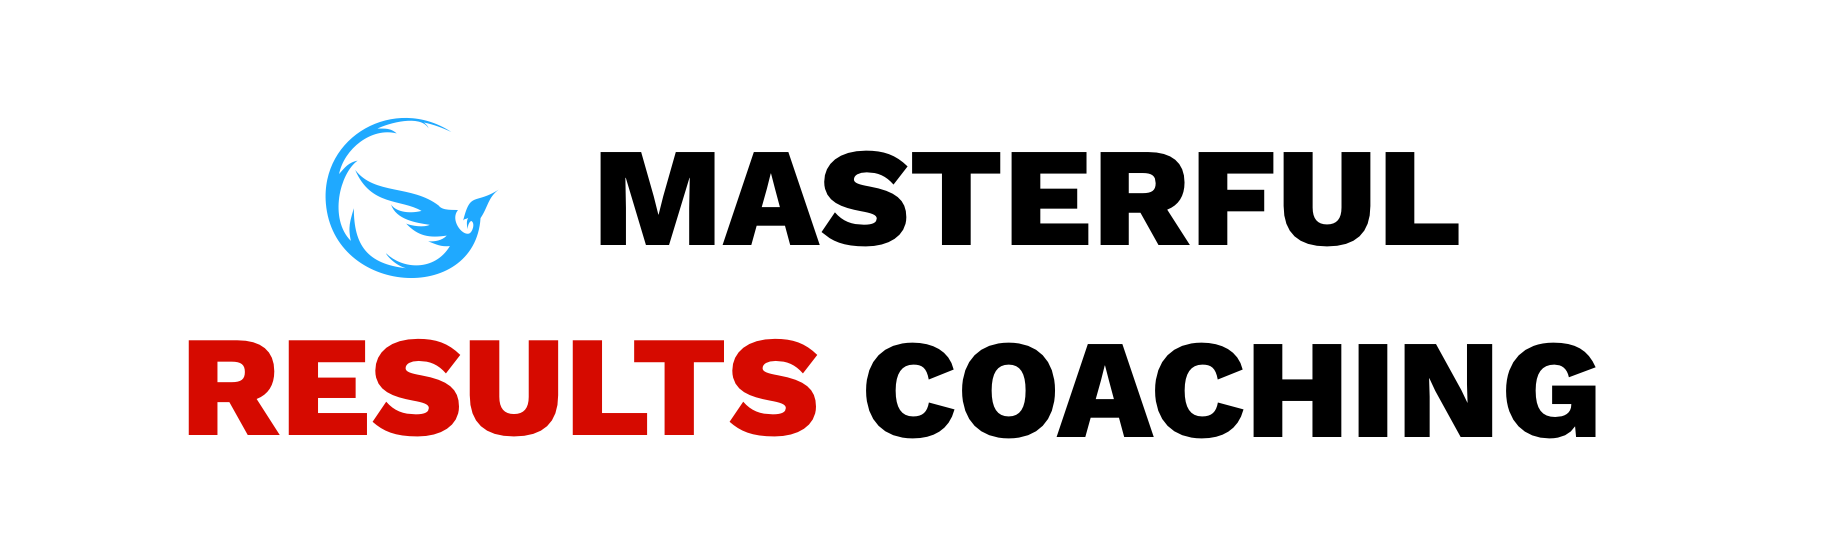 Masterful Results Coaching Logo